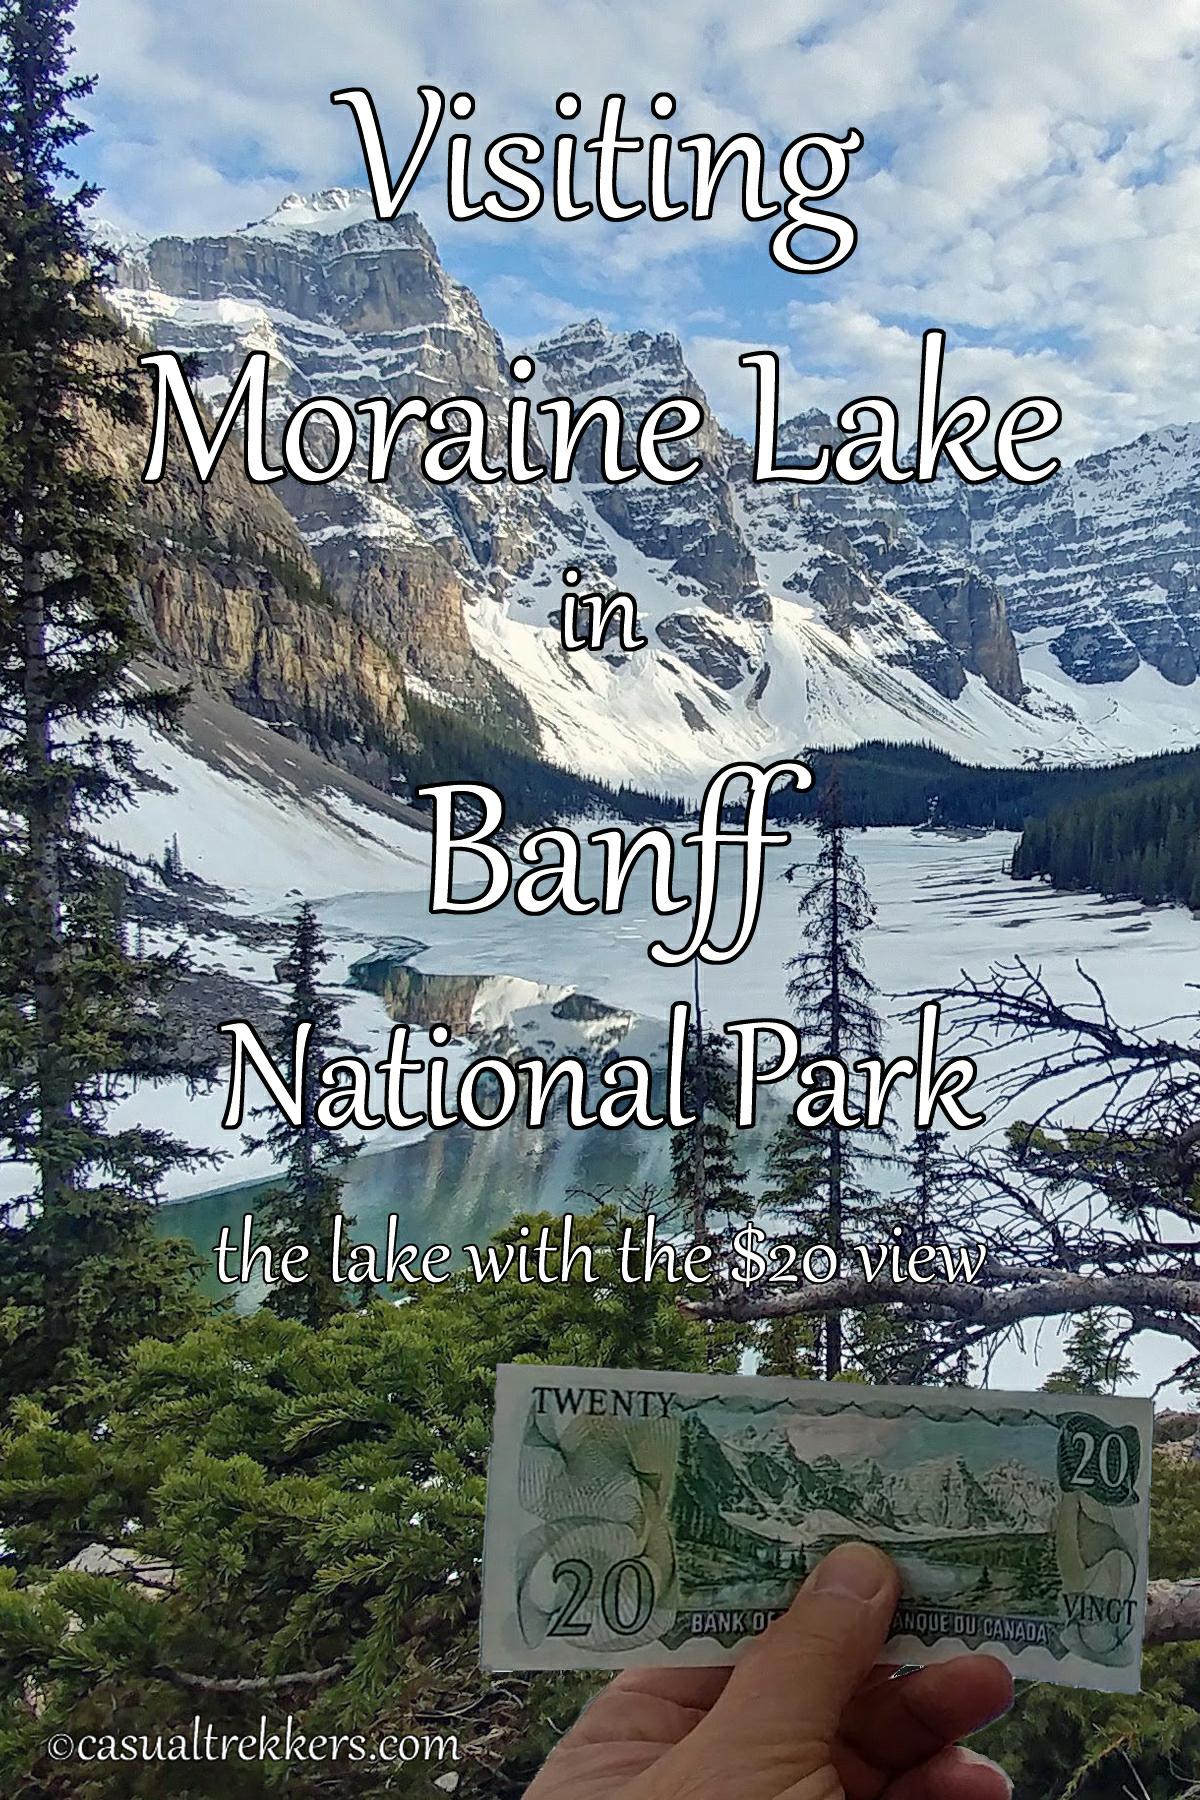 Moraine Lake - The Twenty Dollar View